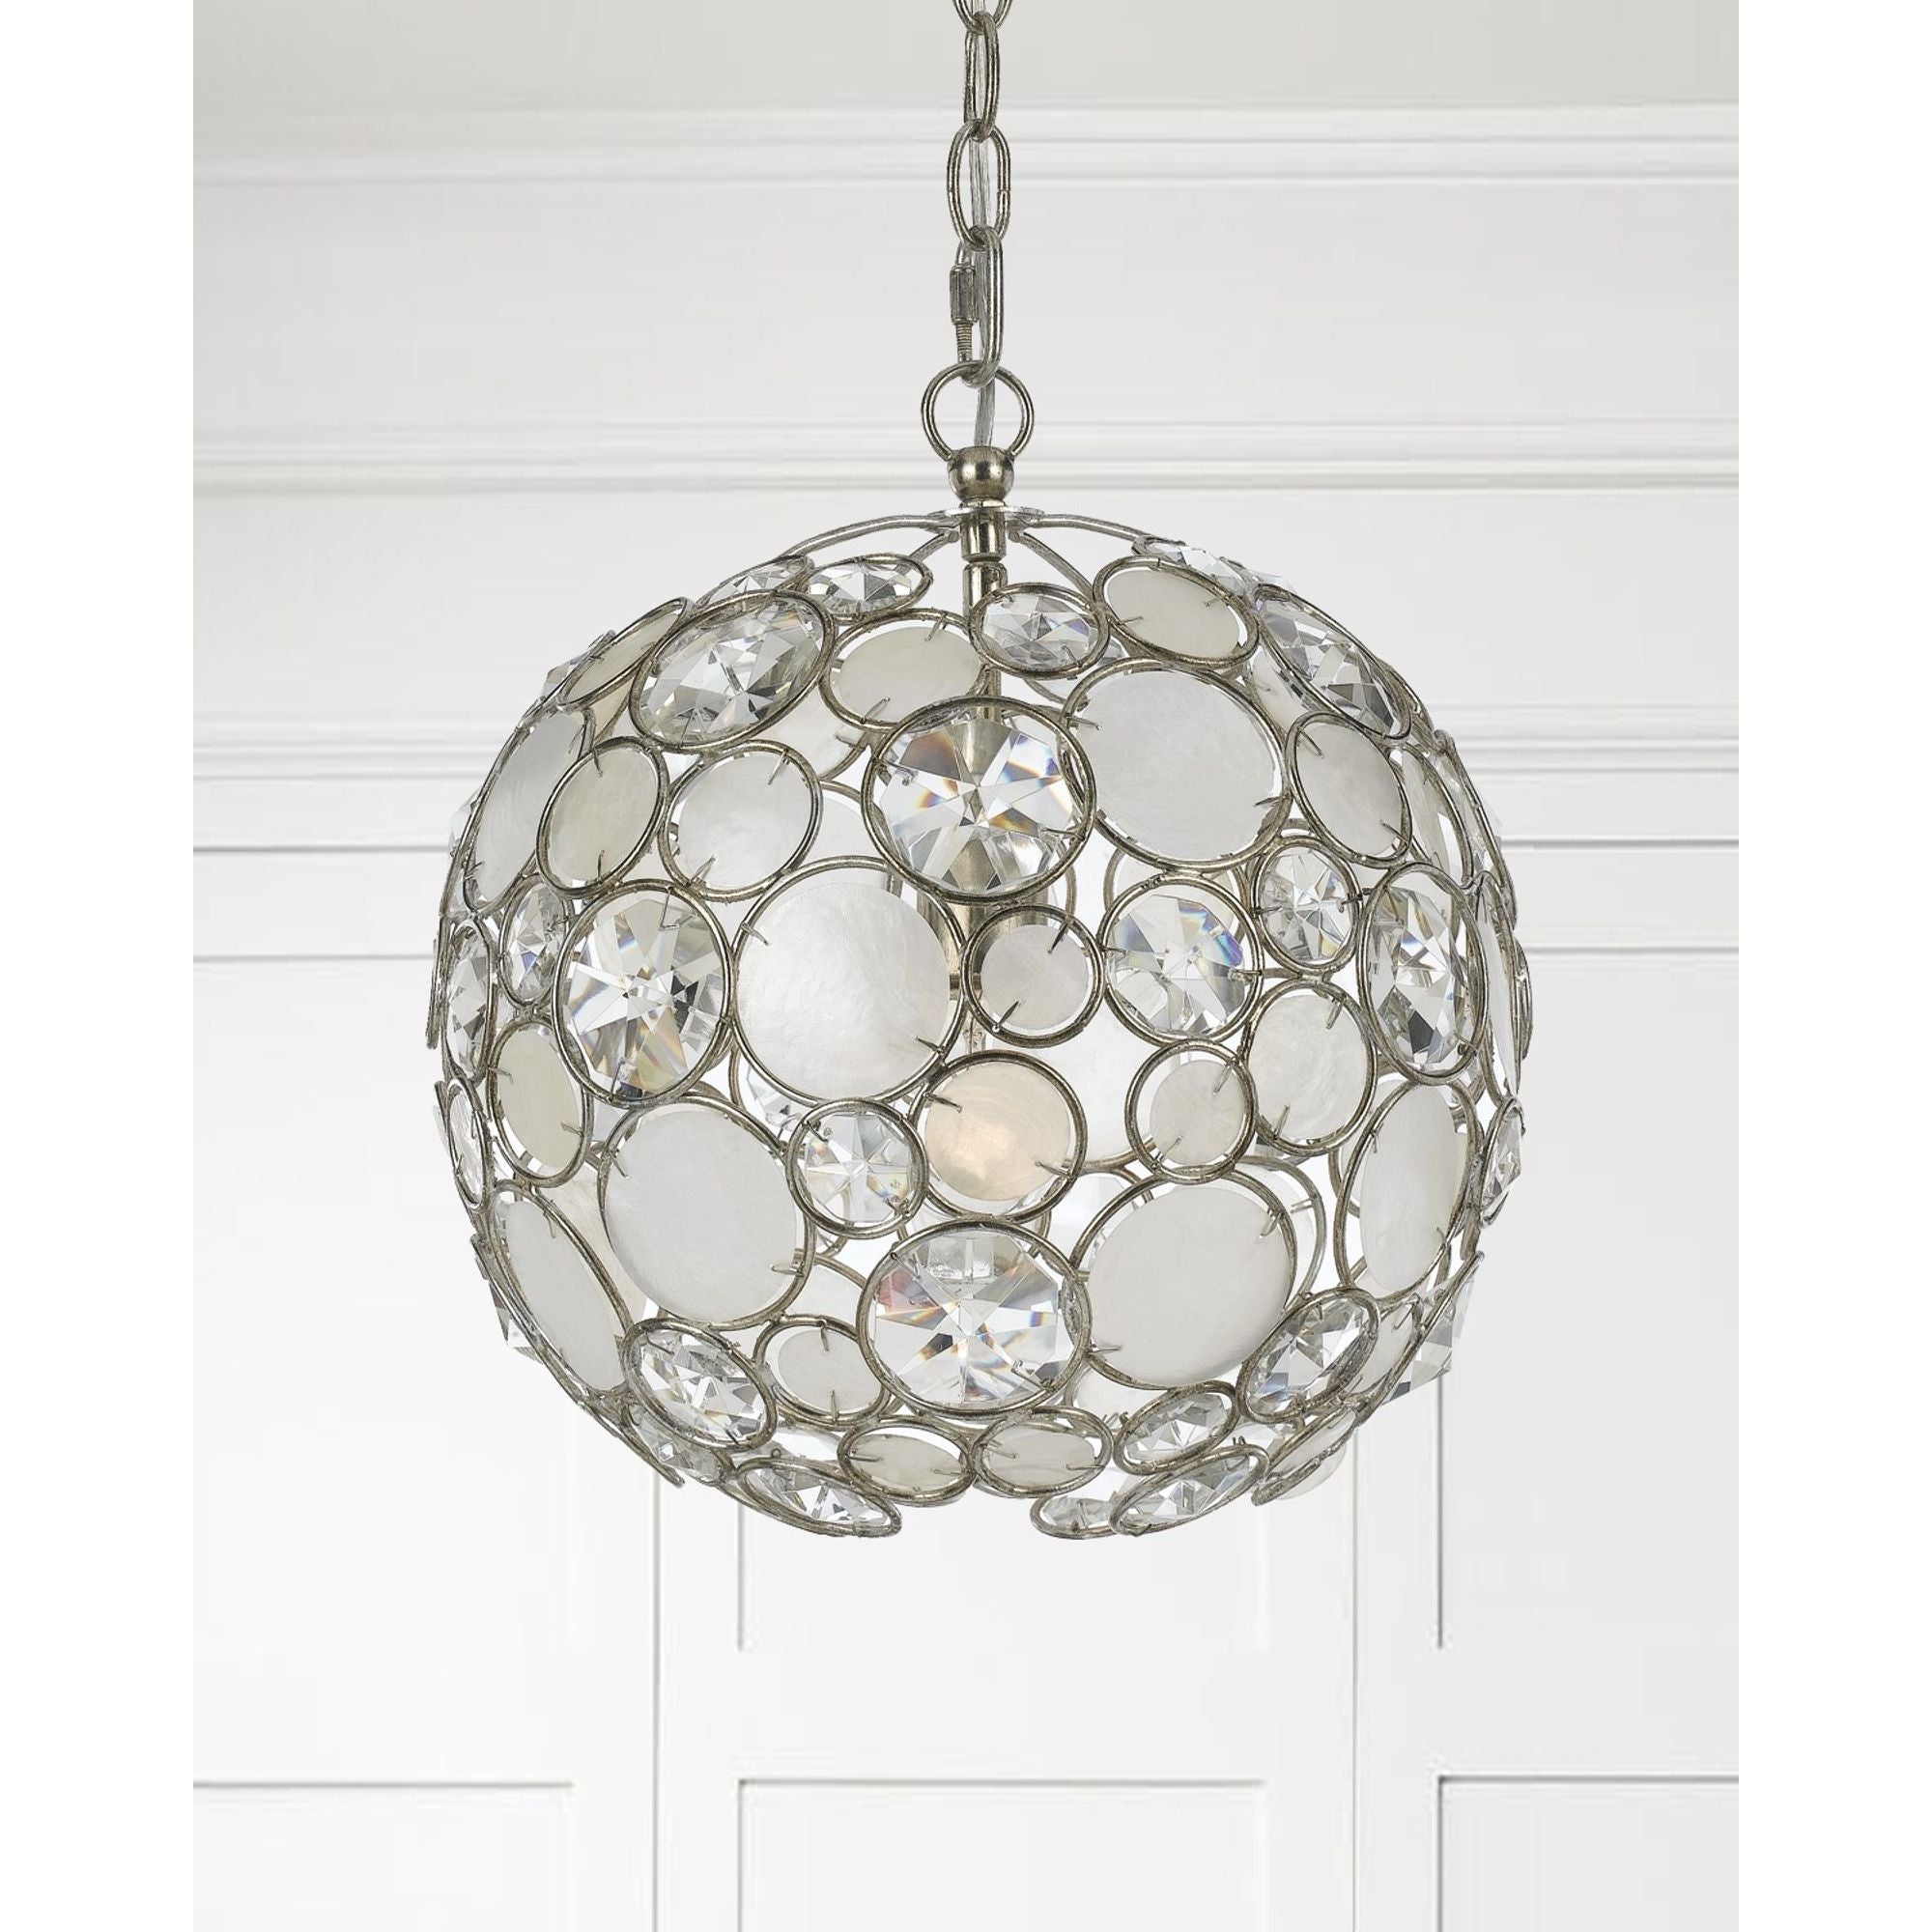 Palla 1 Light Antique Silver Sphere Mini Chandelier